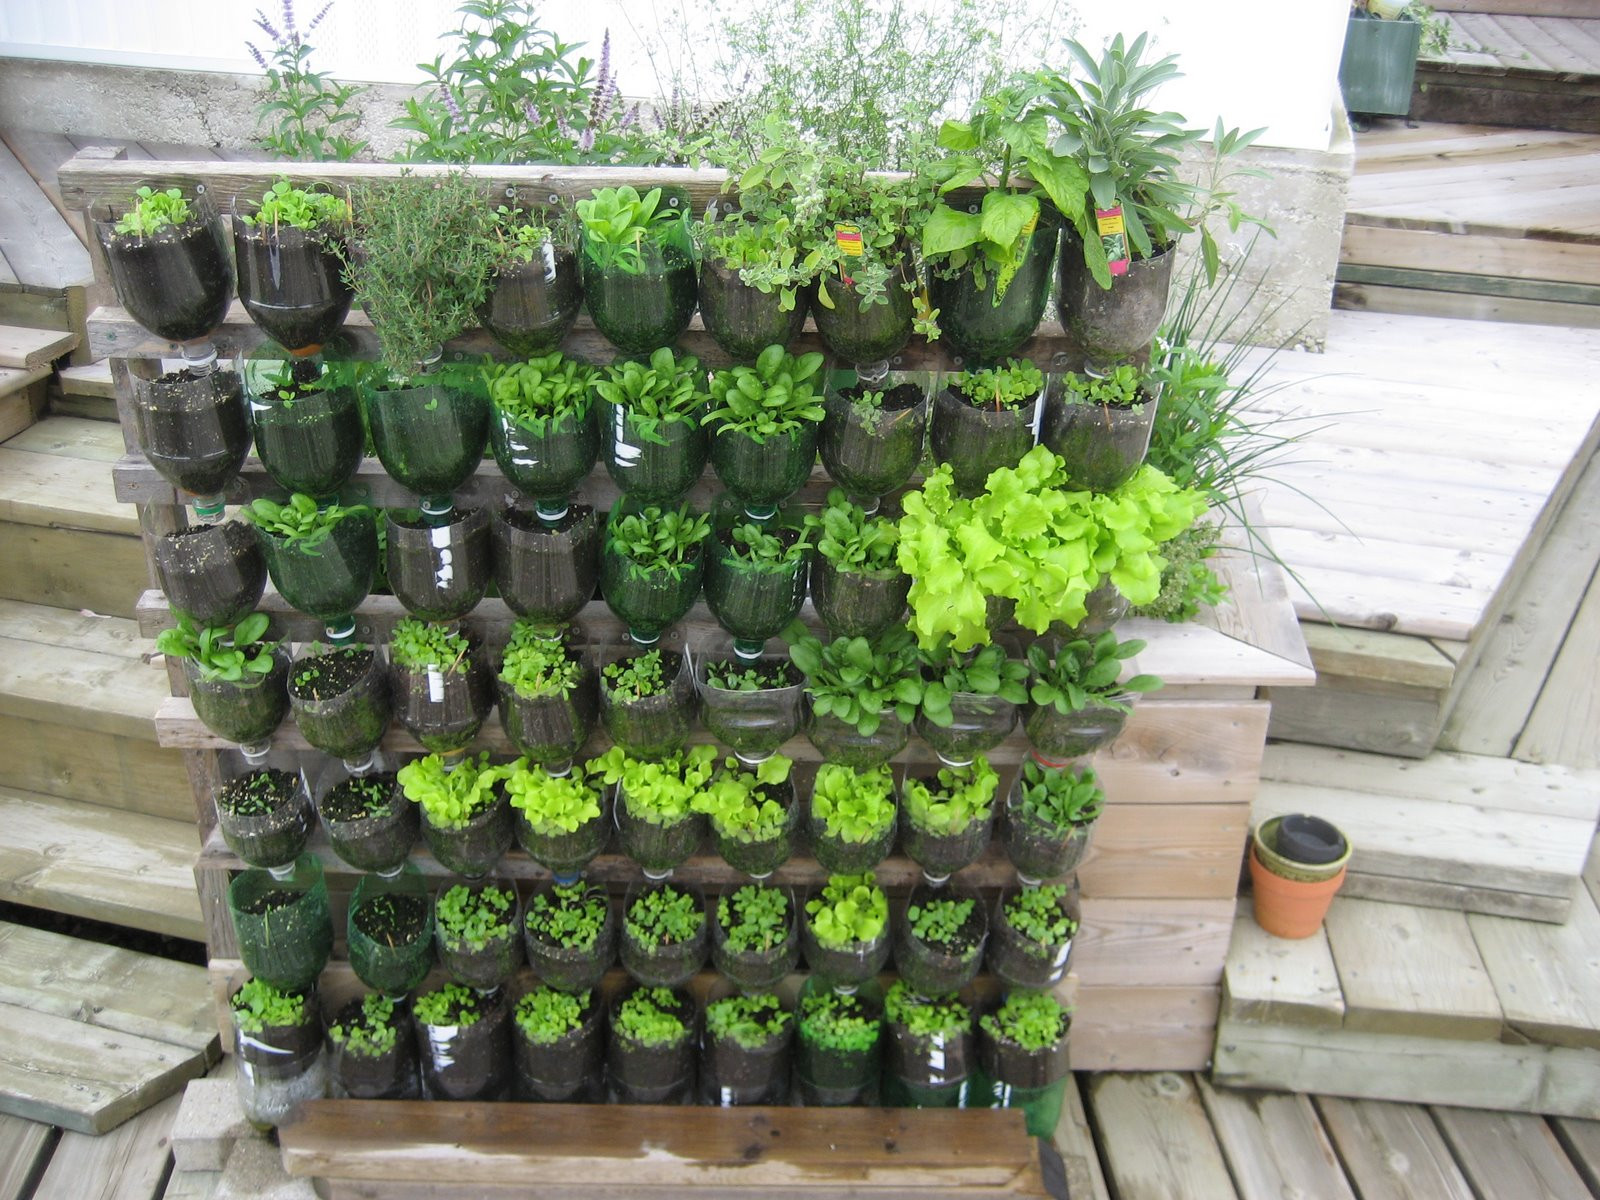 Best ideas about Patio Vegetable Garden Ideas
. Save or Pin 20 Vertical Ve able Garden Ideas Now.